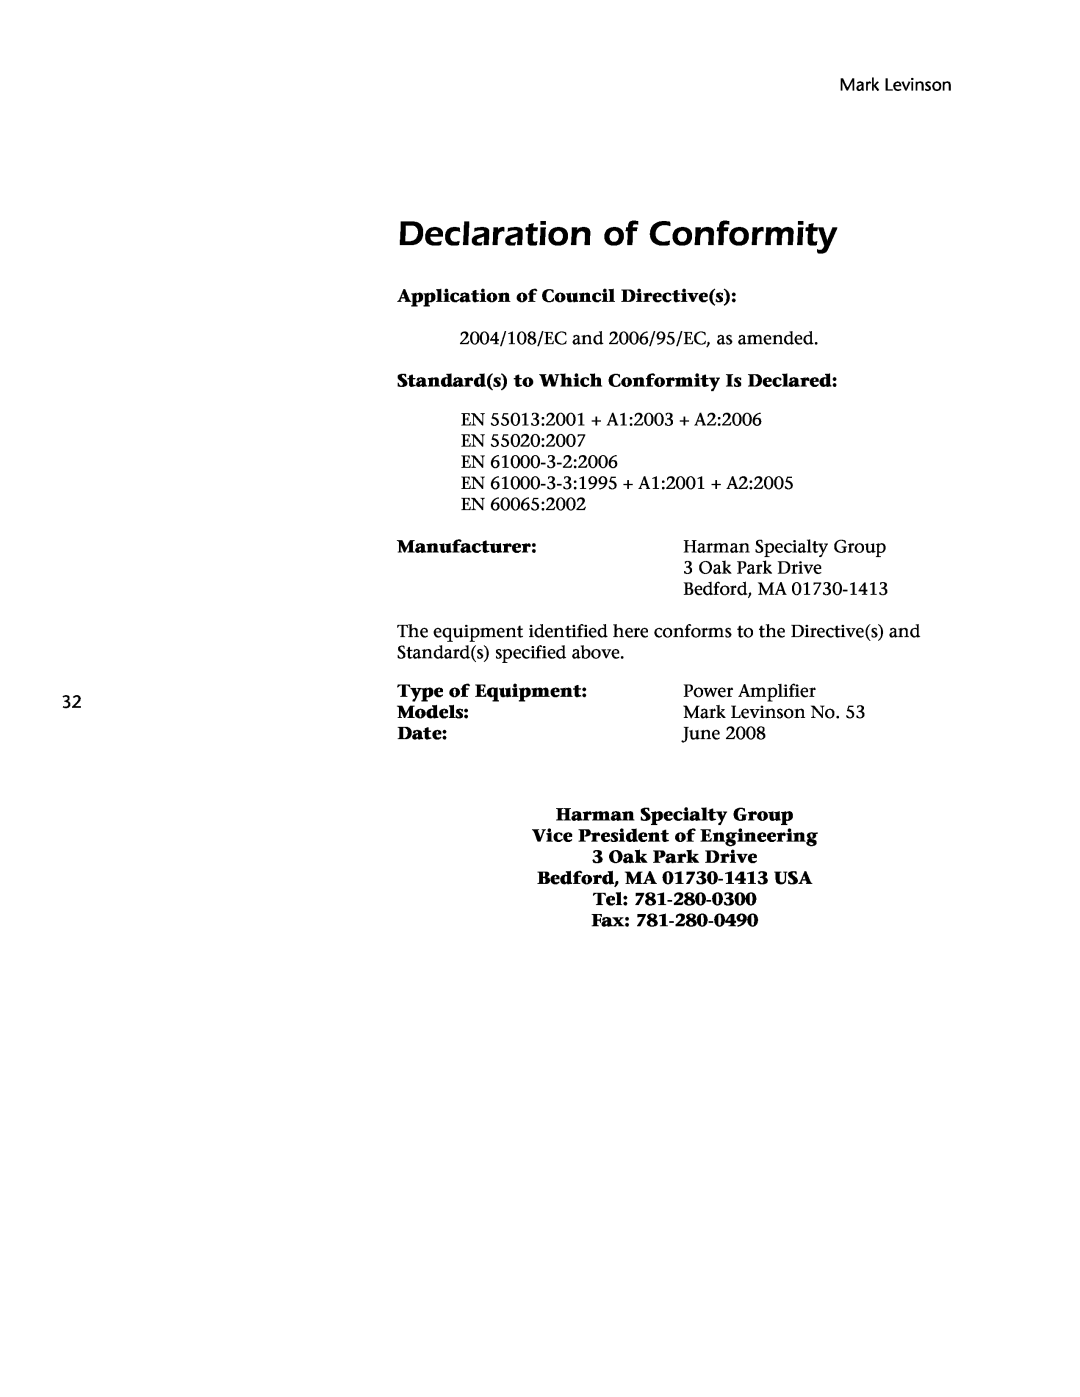 Mark Levinson 53 owner manual Declaration of Conformity 